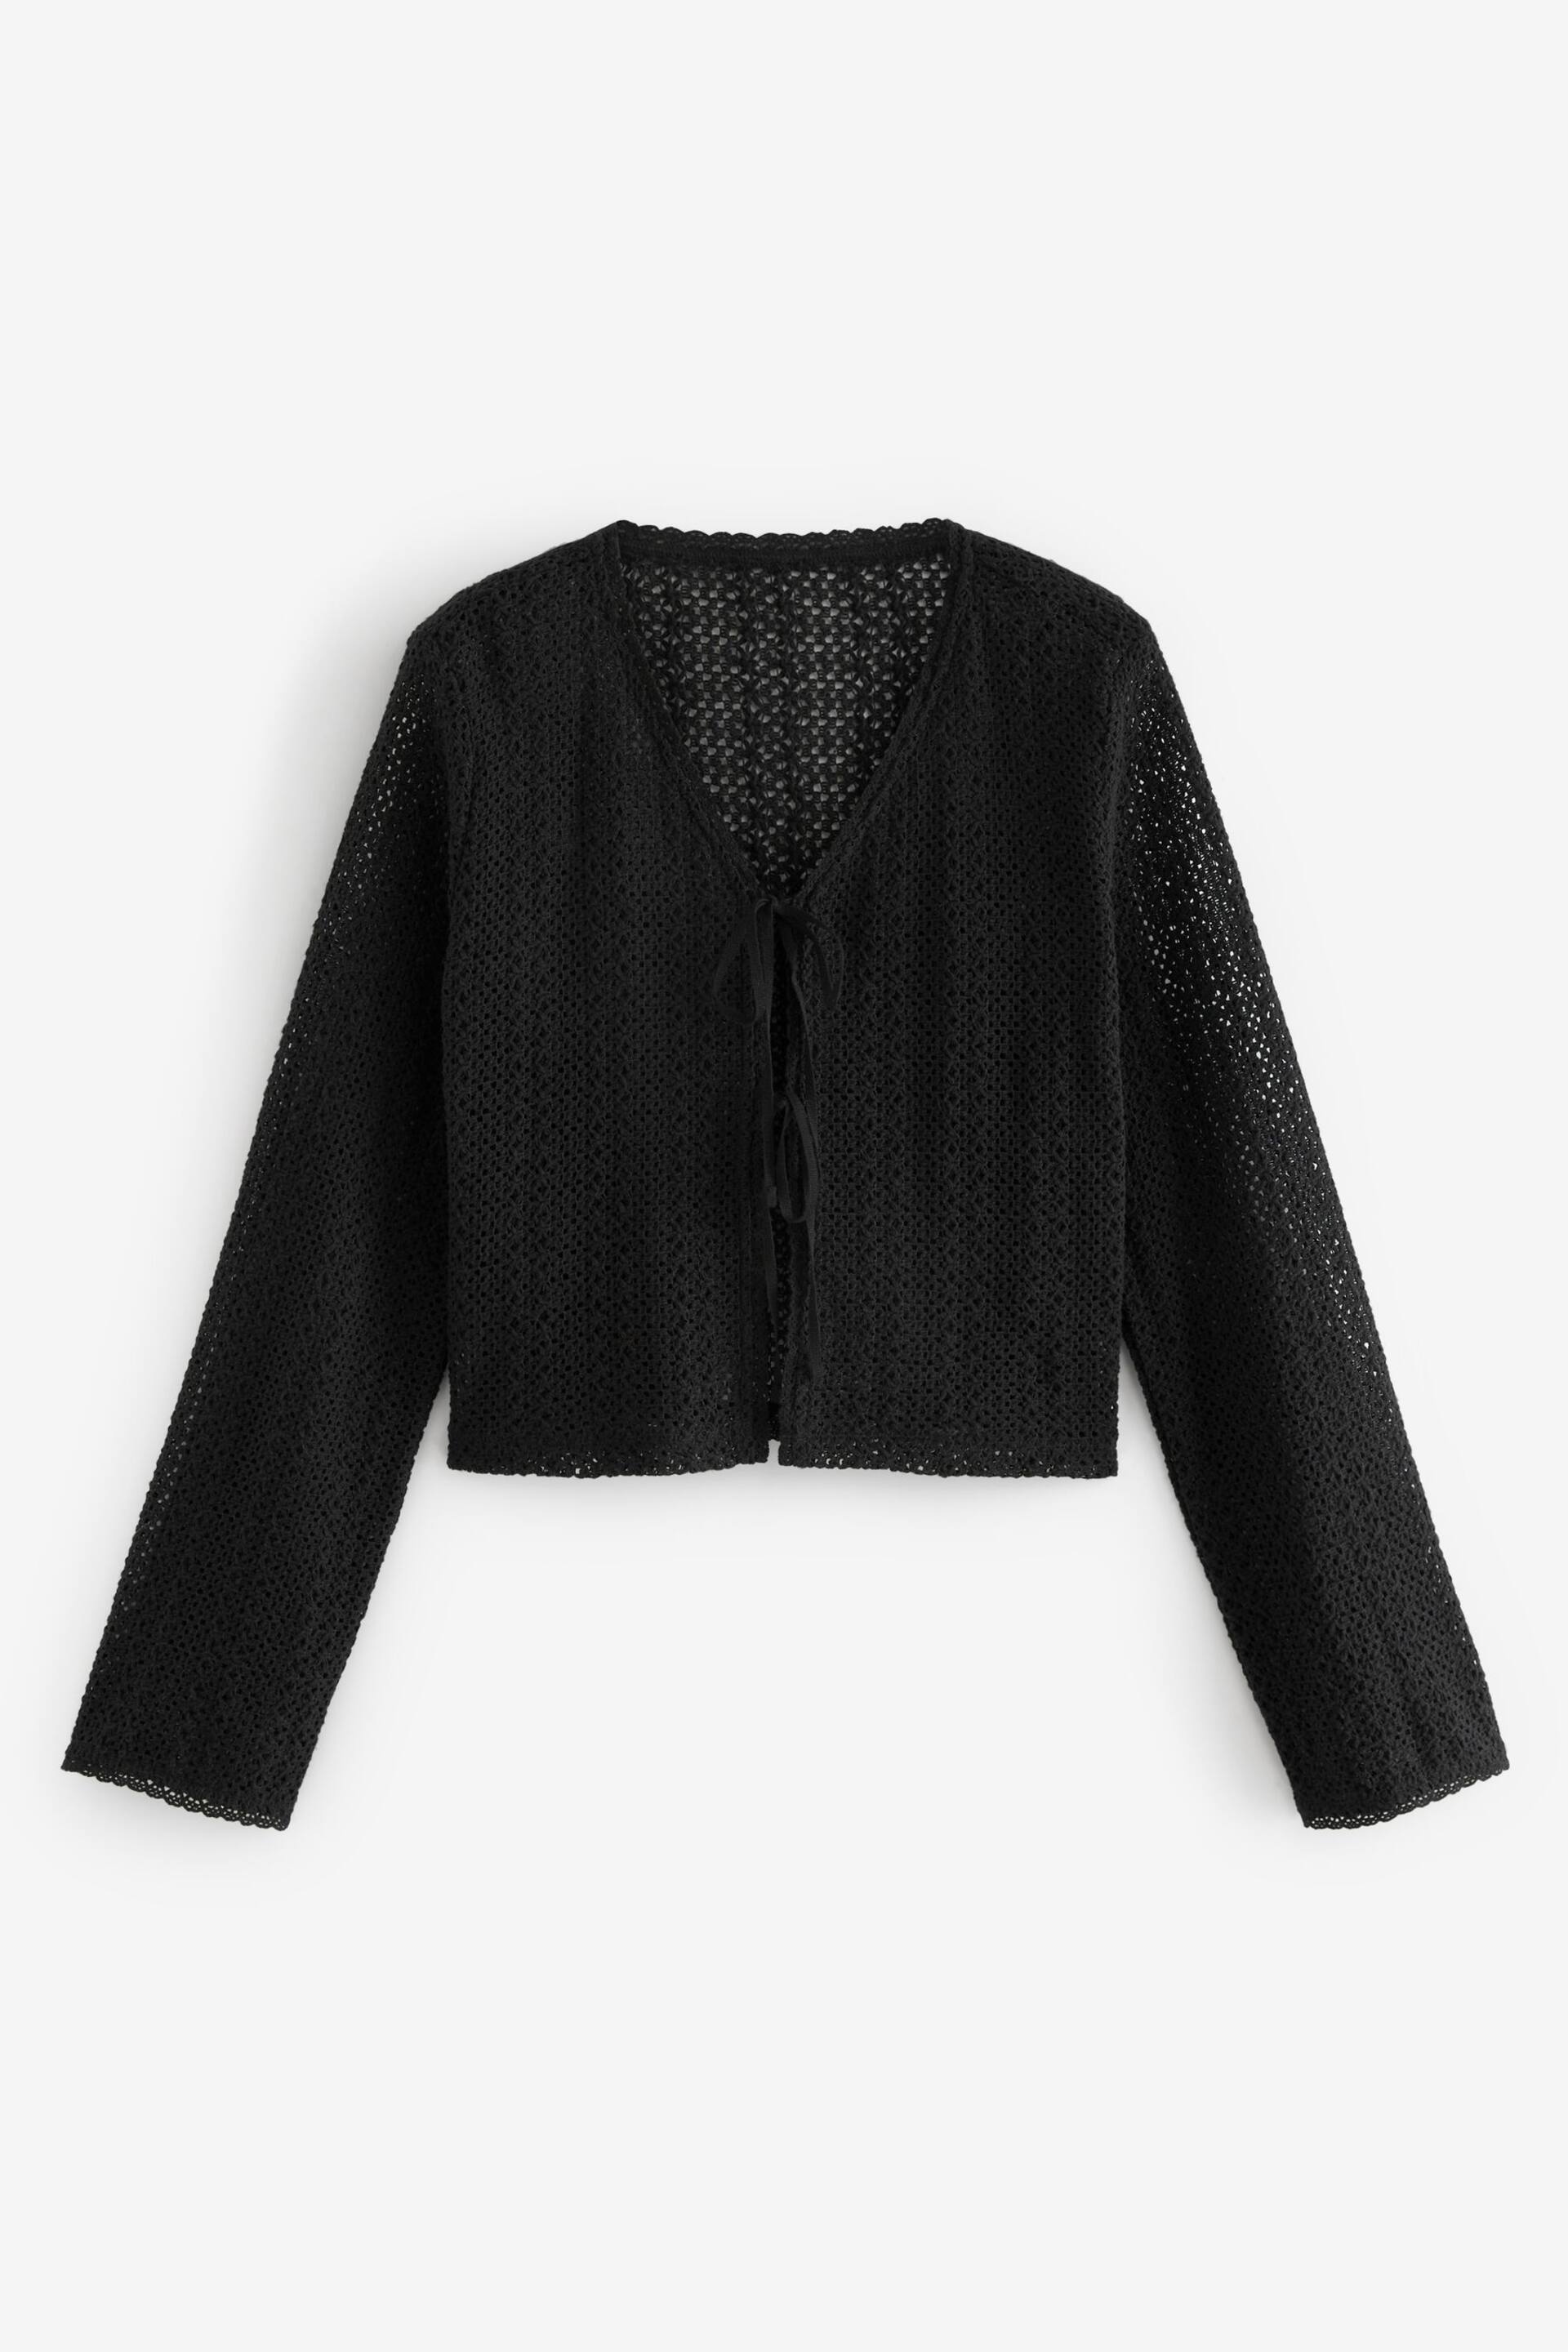 Black Crochet Knit Tie Detail Textured Cardigan - Image 5 of 6